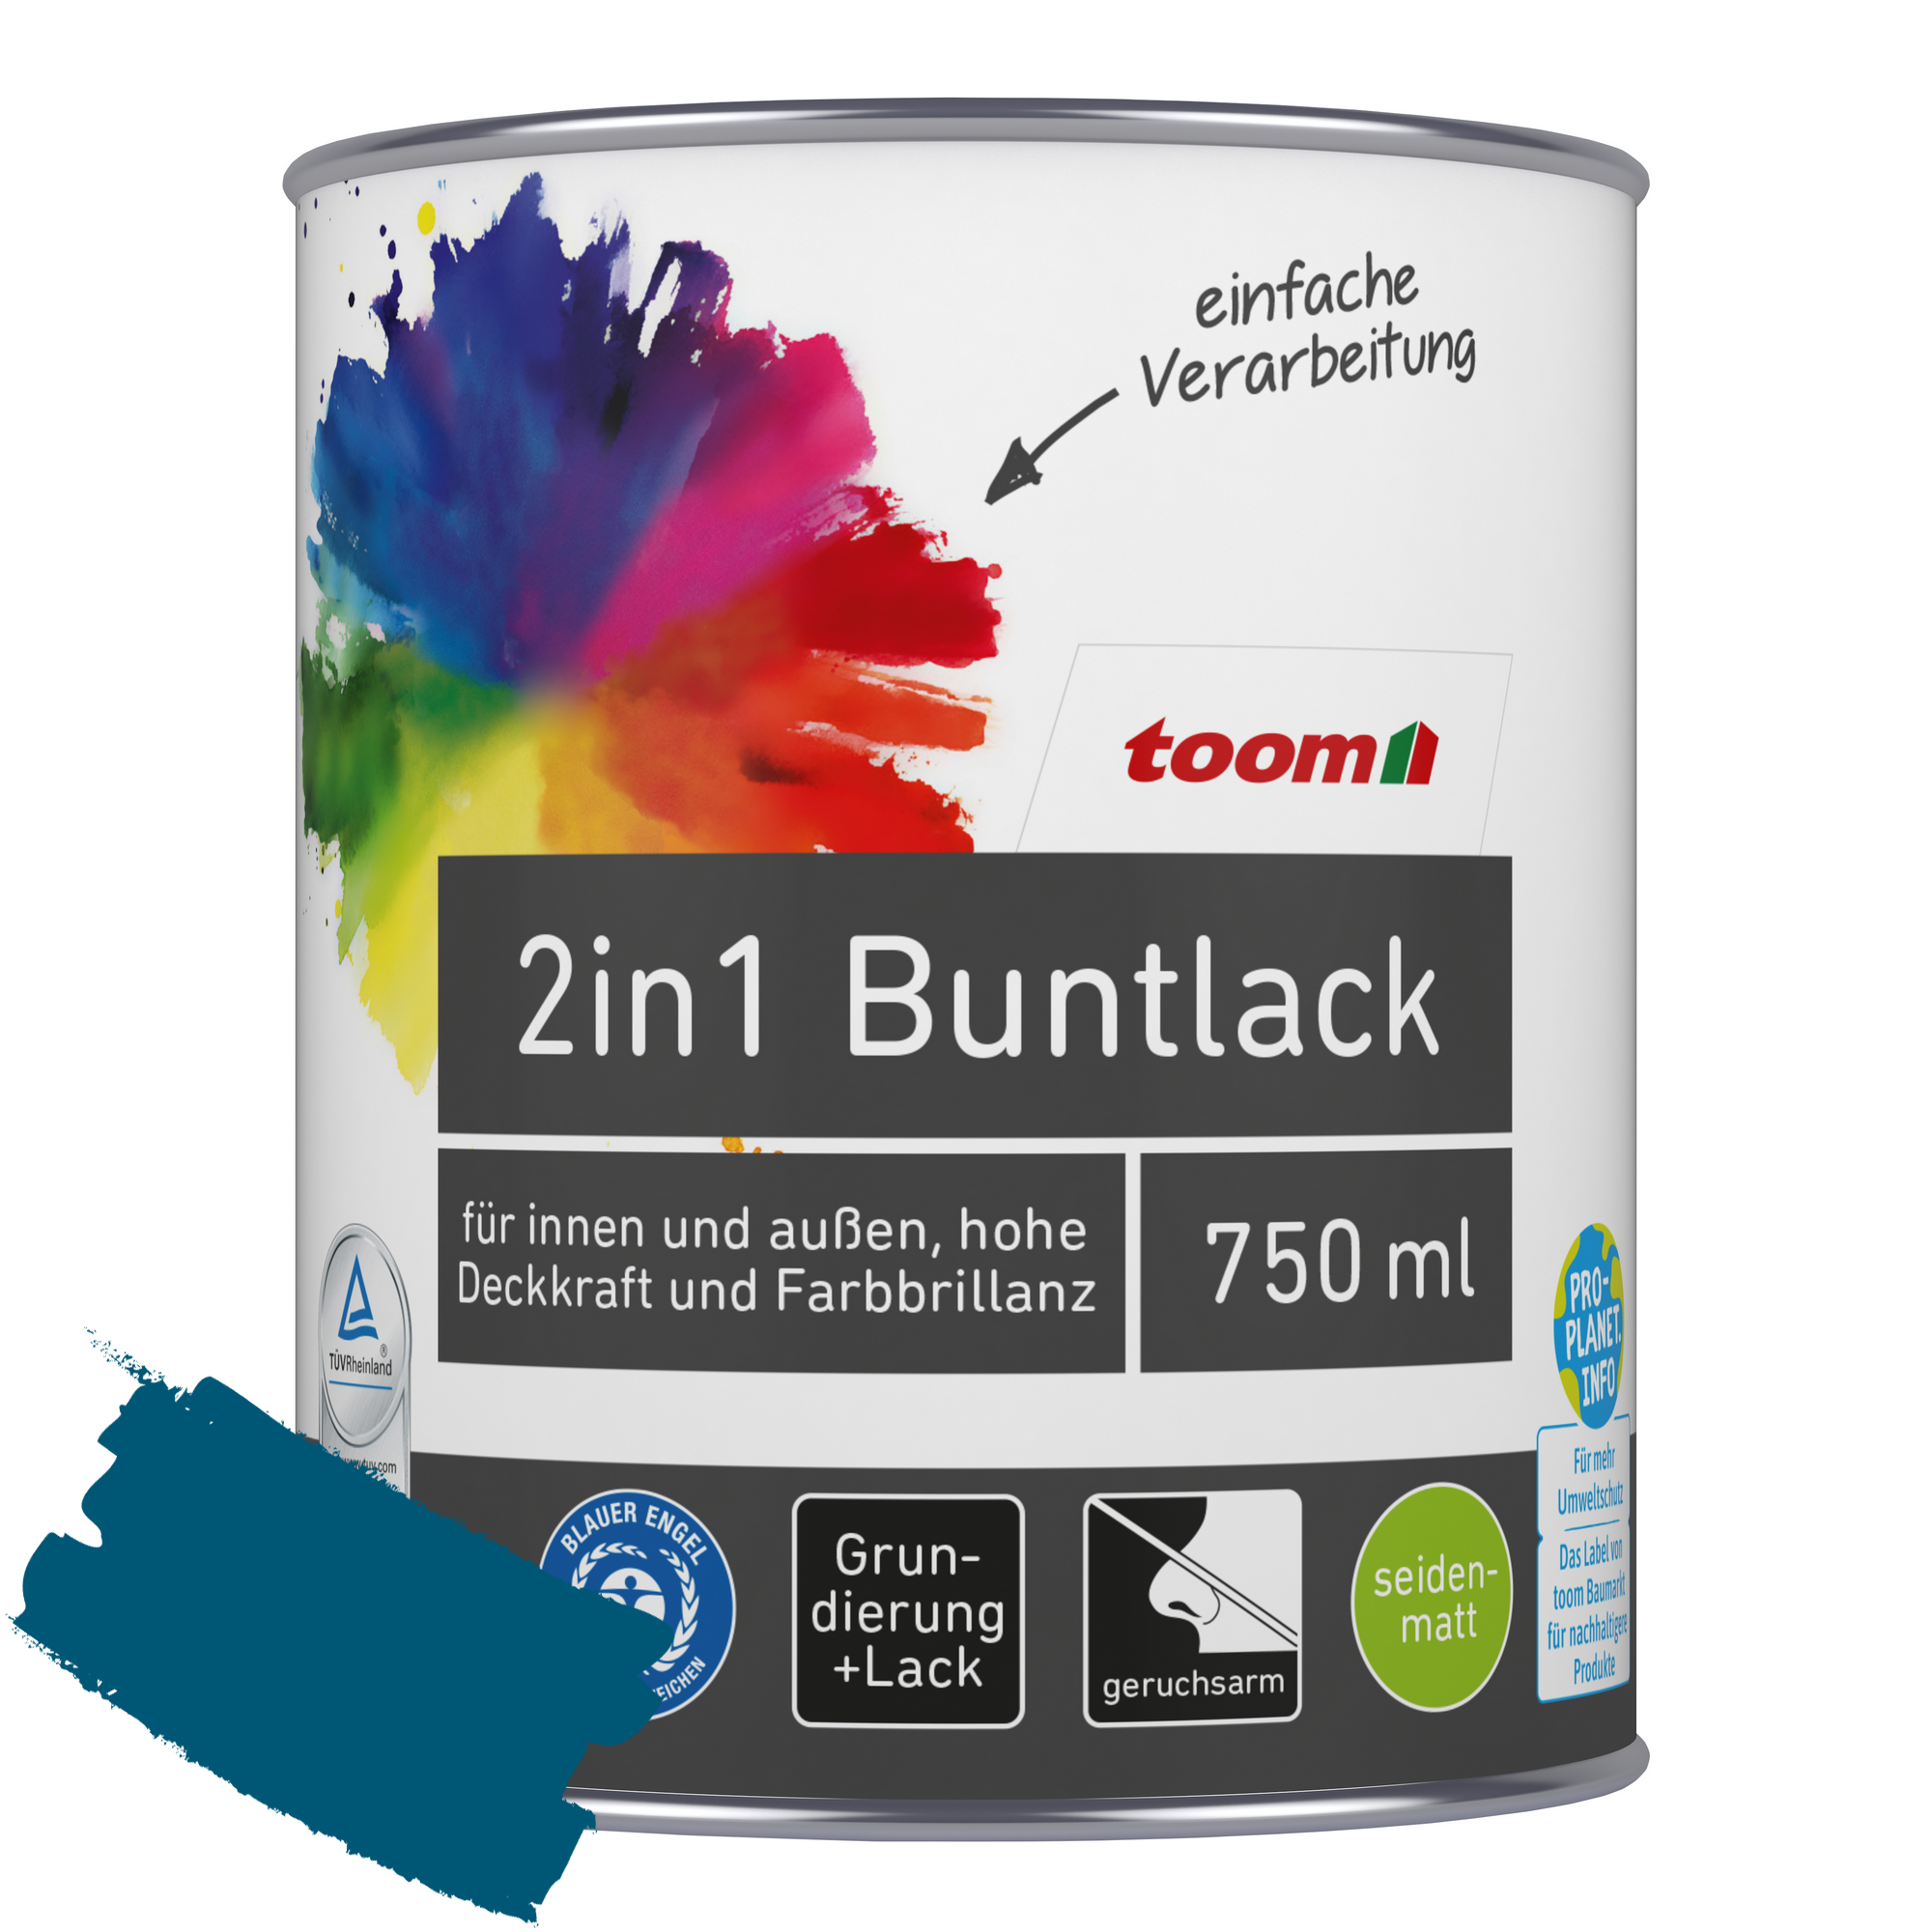 2in1 Buntlack 'Blaupause' enzianblau seidenmatt 750 ml + product picture